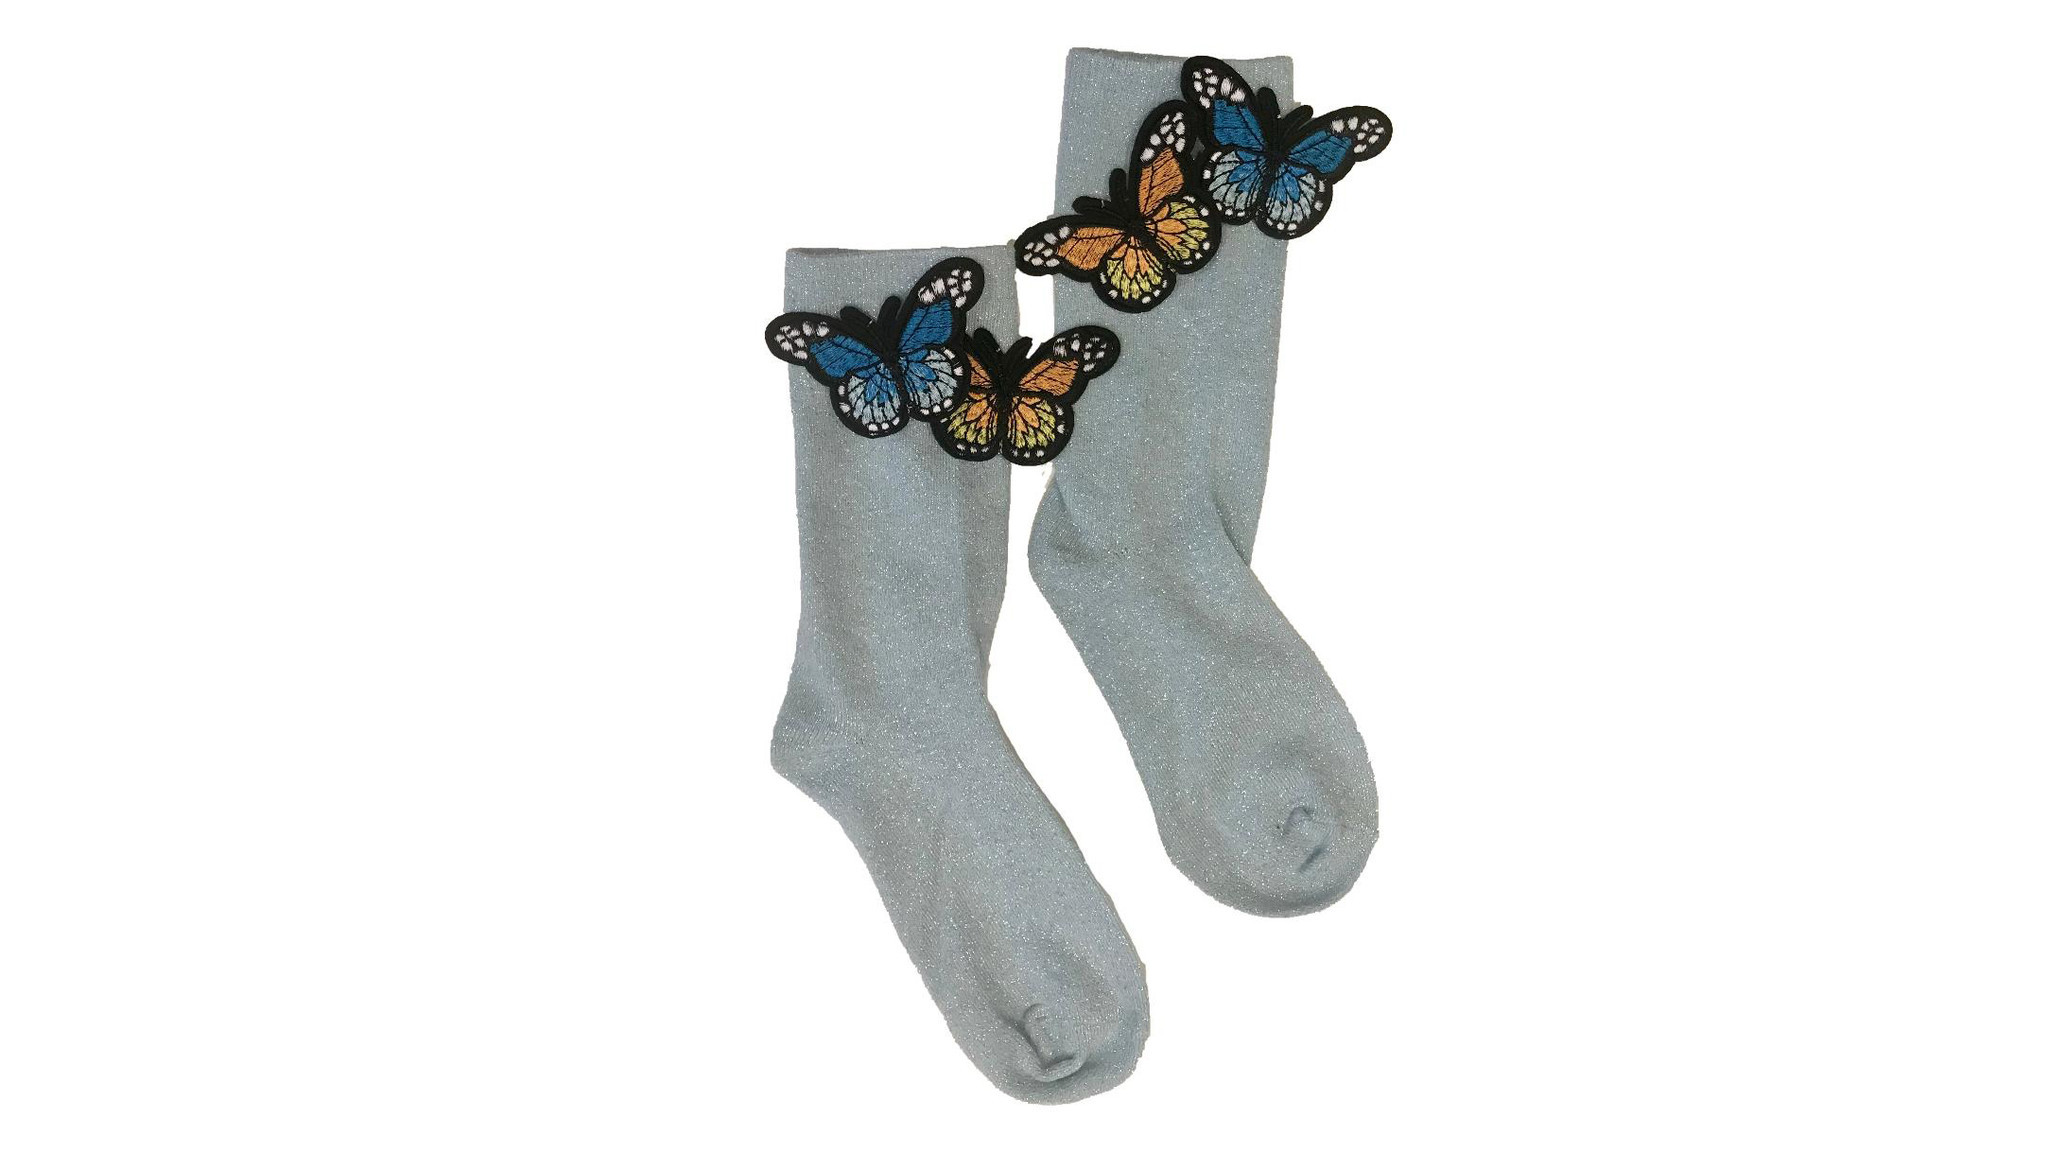 High Heel Jungle by Kathryn Eisman glitter socks with crystal floral embellishment, $39 at highheelj